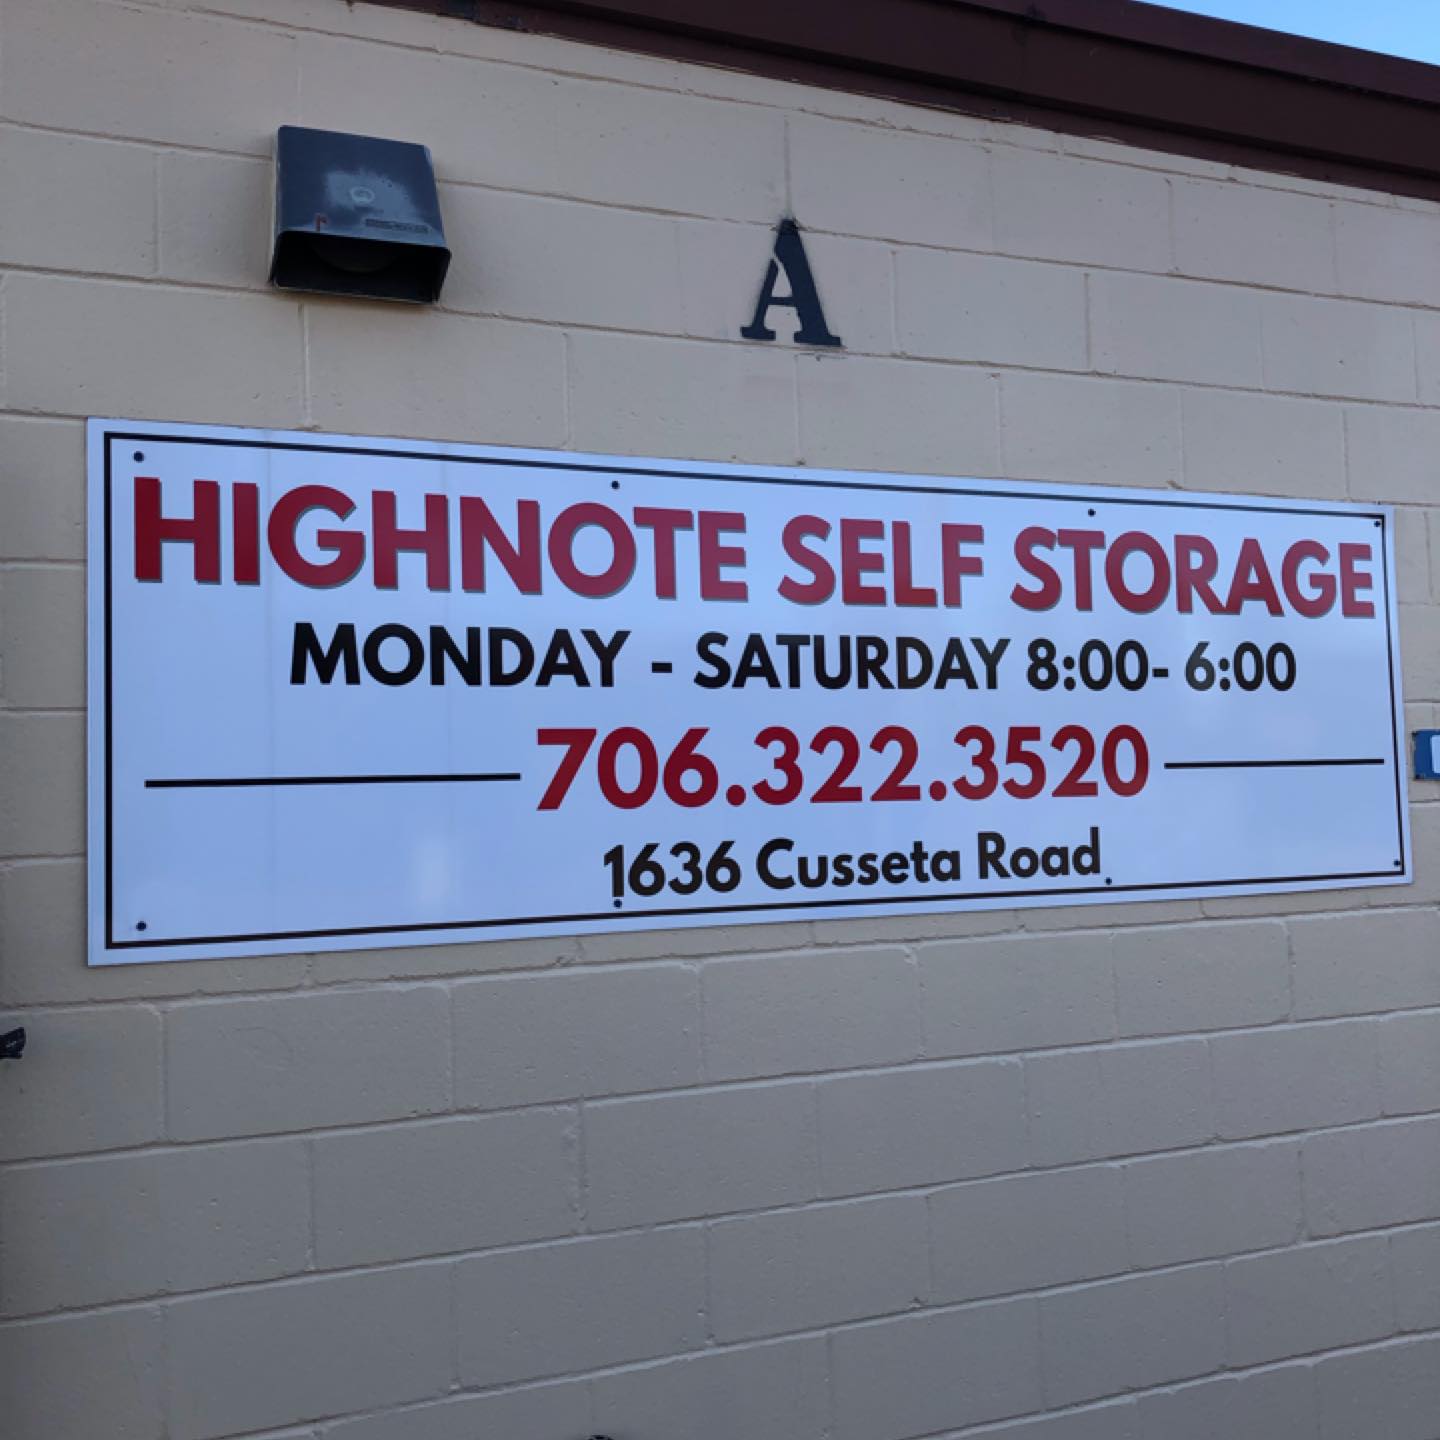 Highnote Self Storage